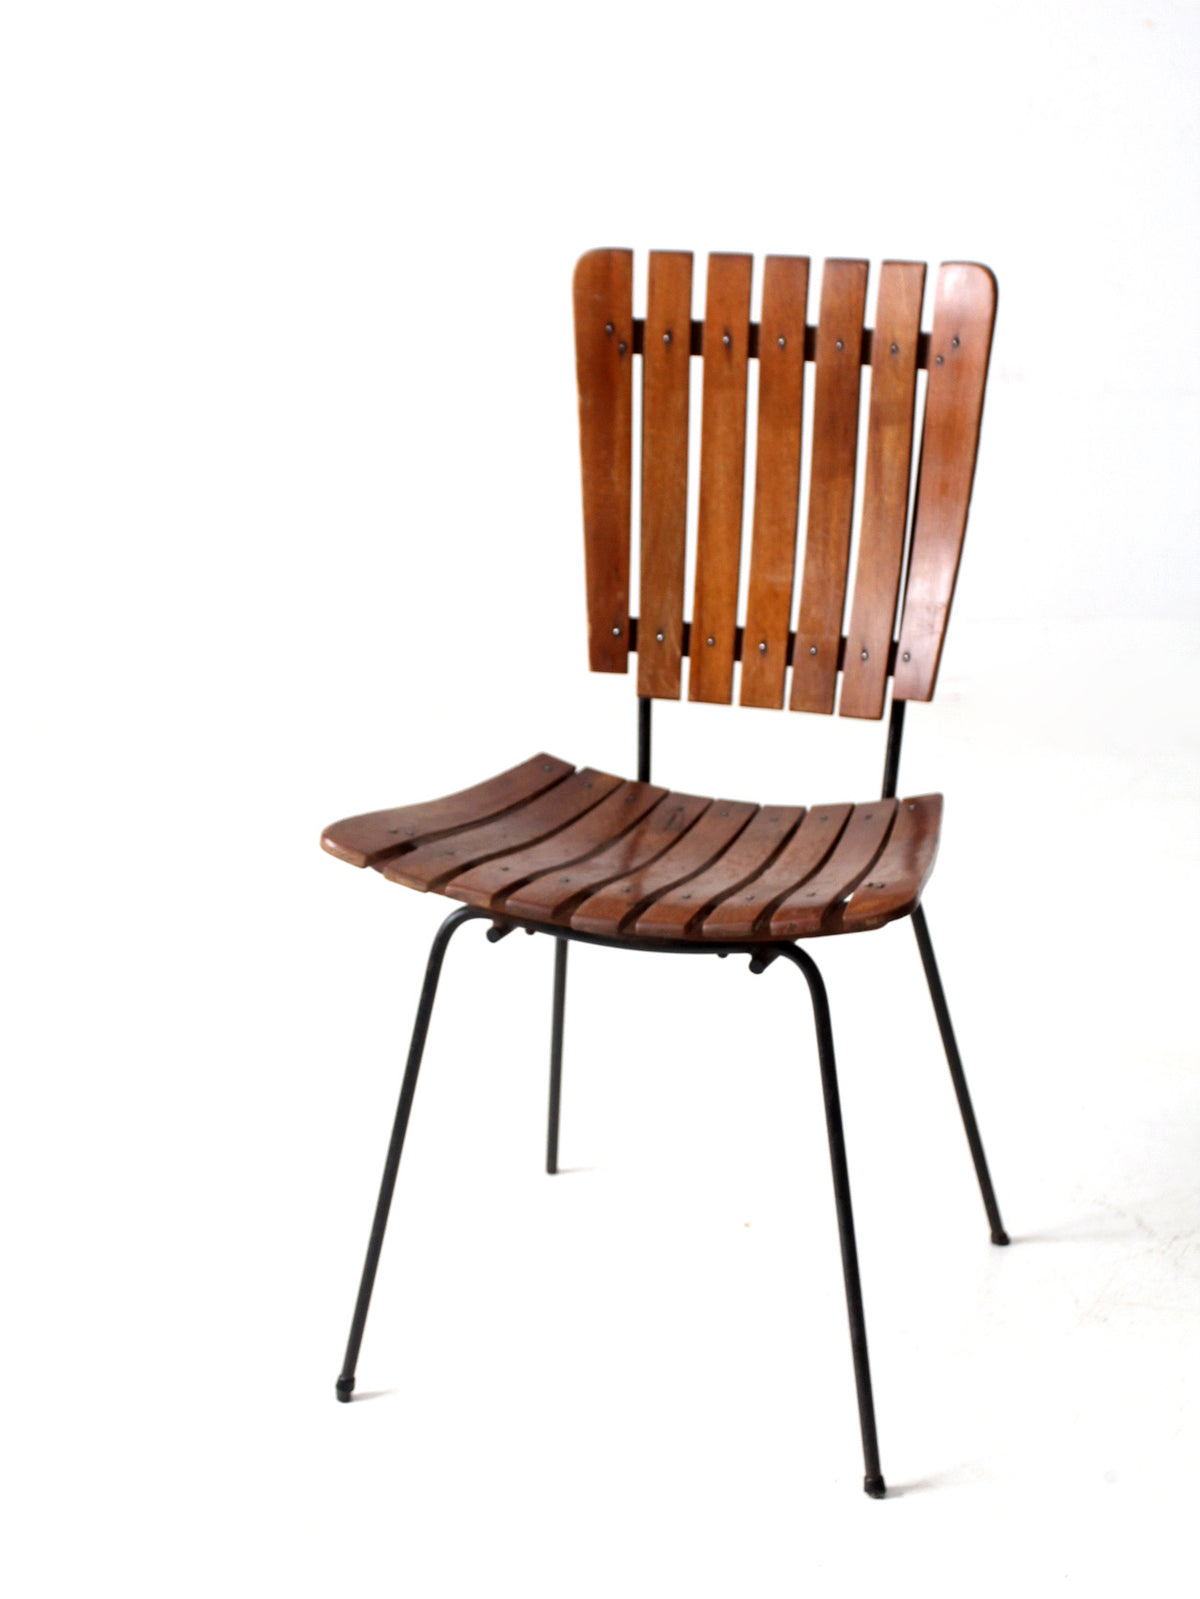 mid century Arthur Umanoff chair